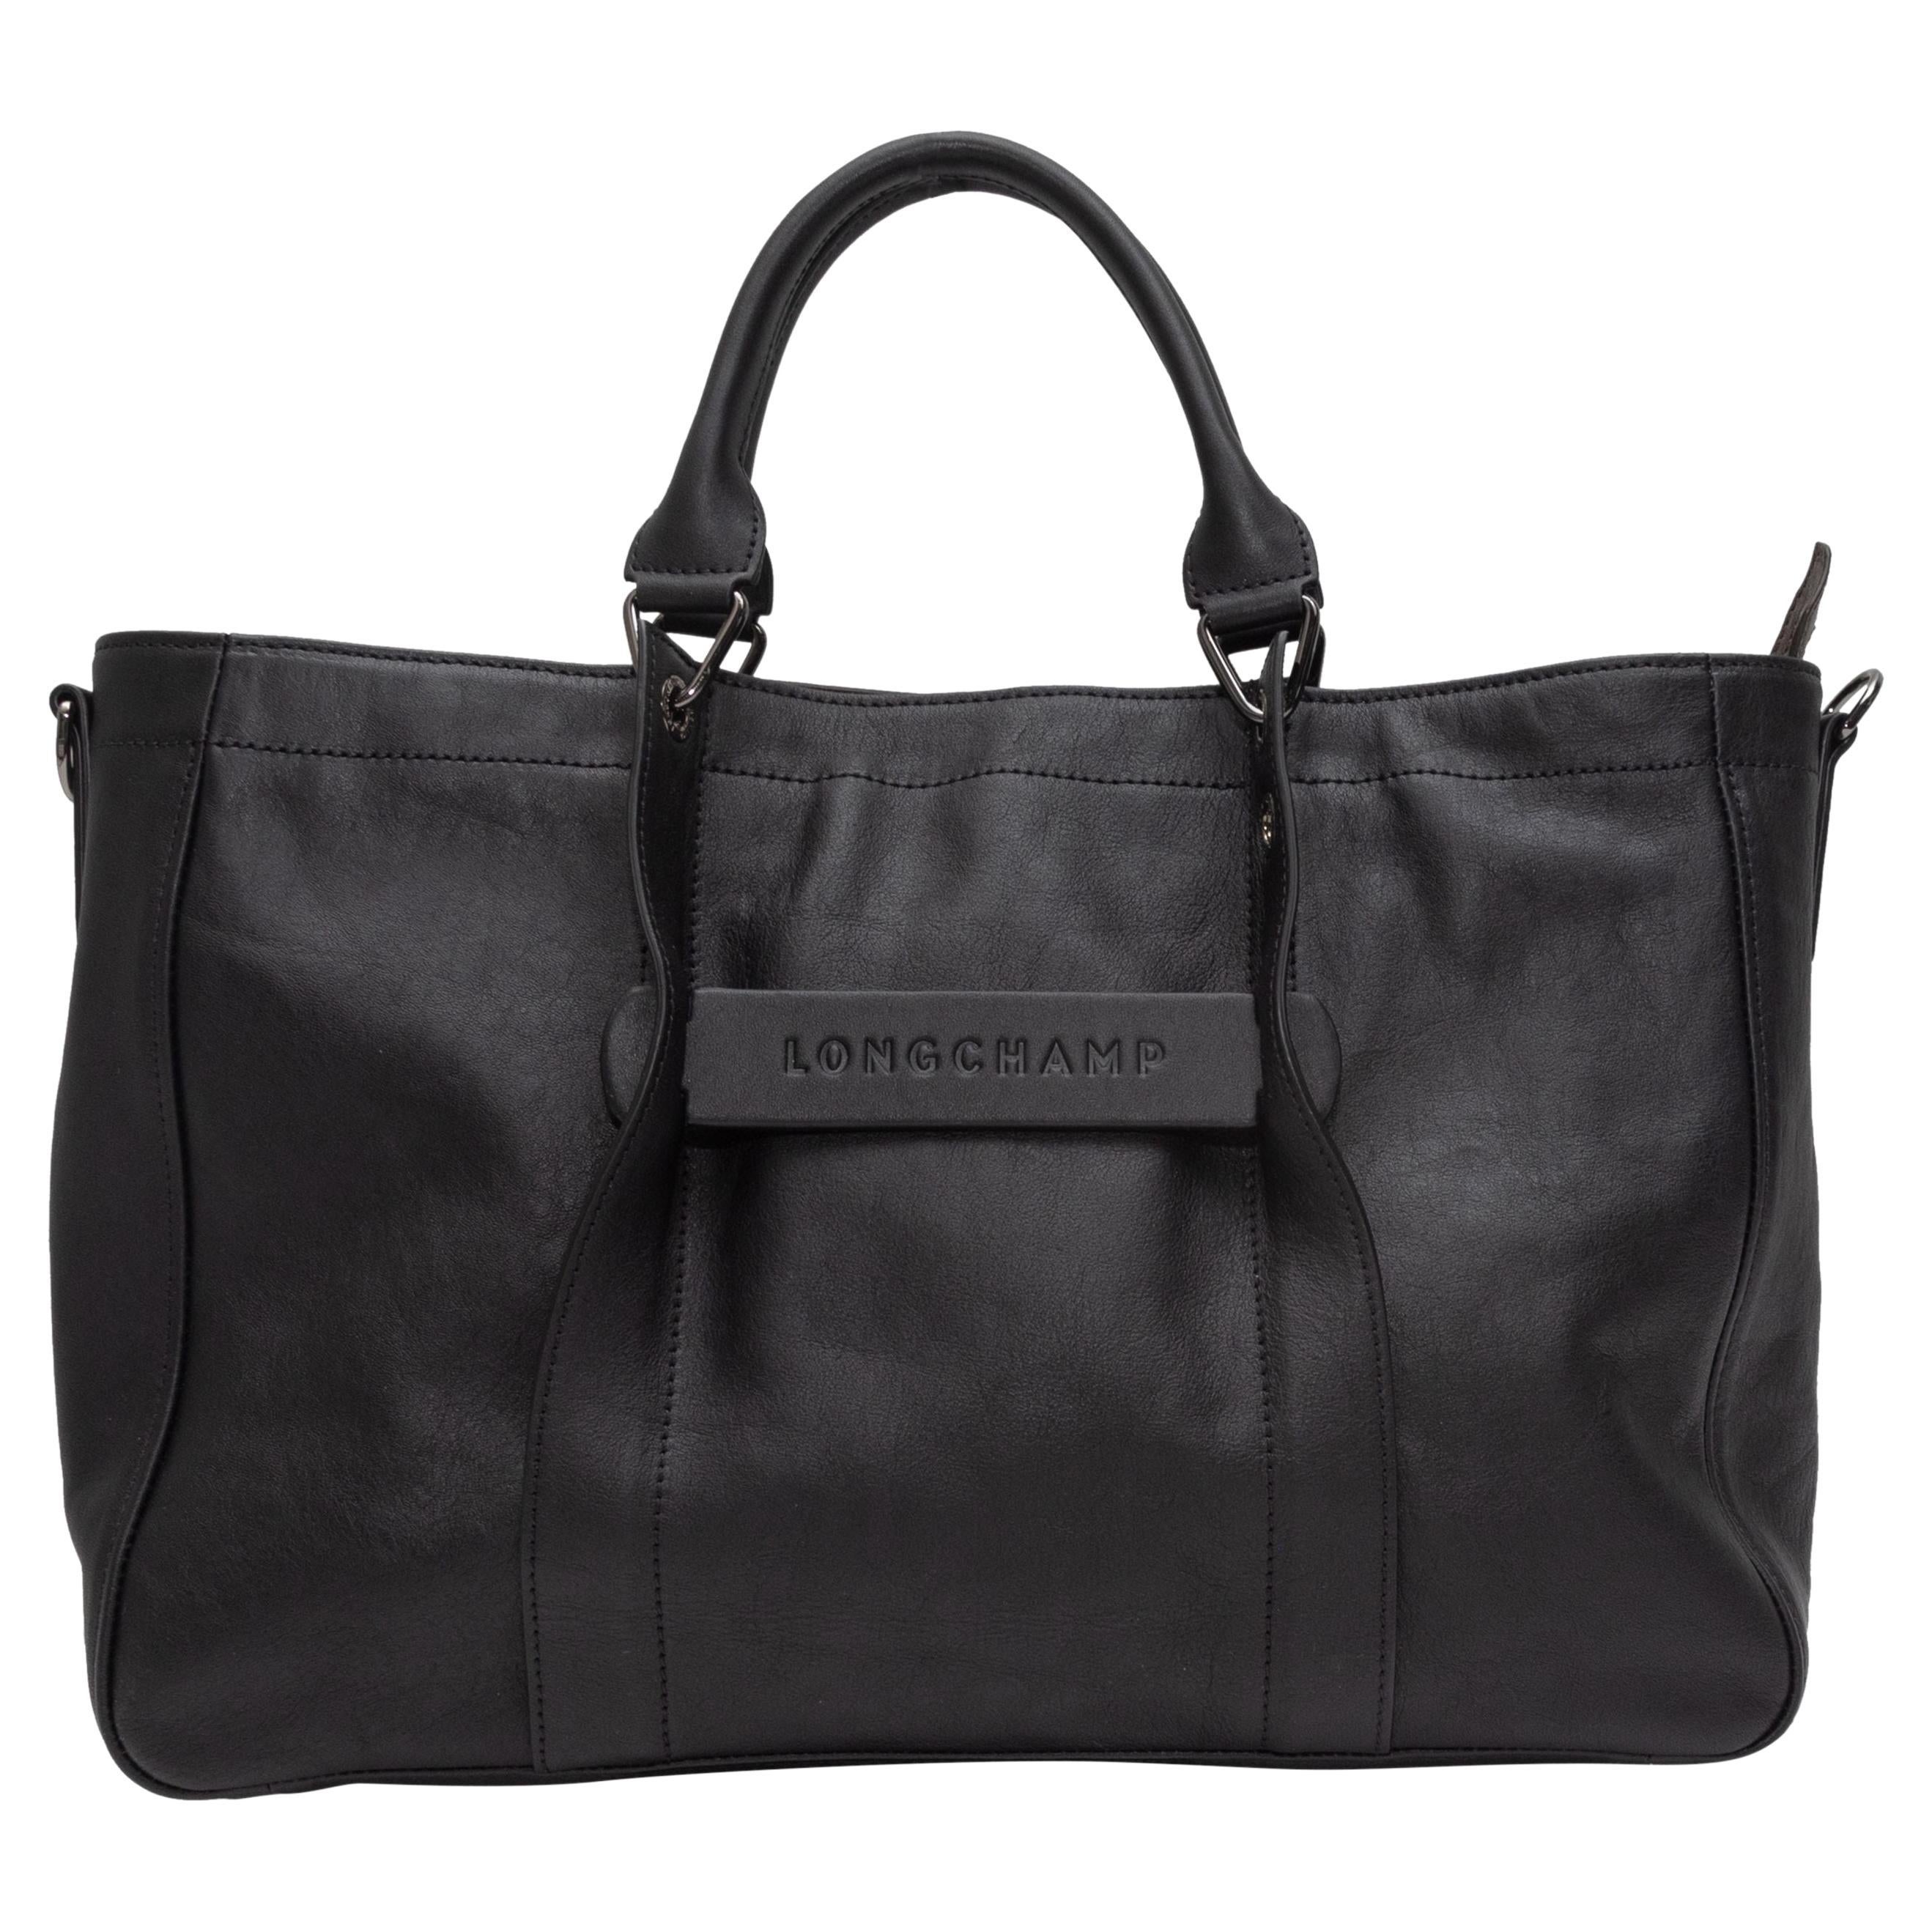 Longchamp Black Leather Top Handle Tote Bag